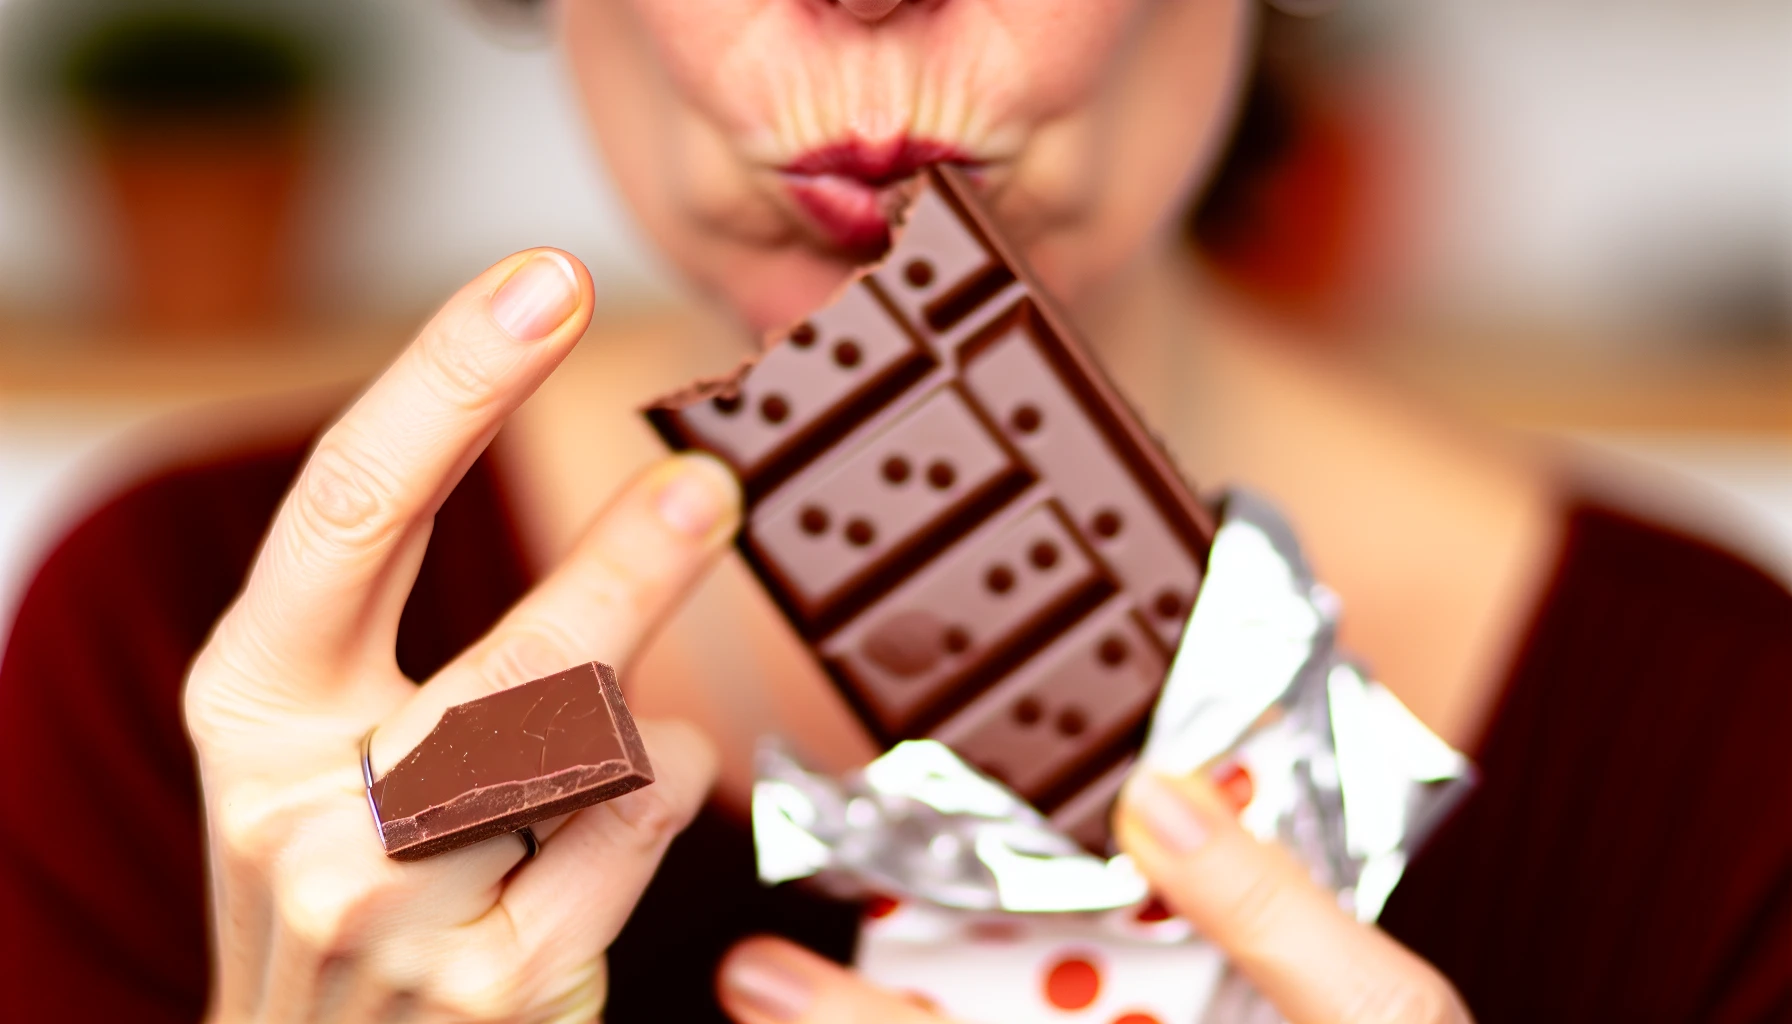 Person taking a bite of a PolkaDot chocolate bar